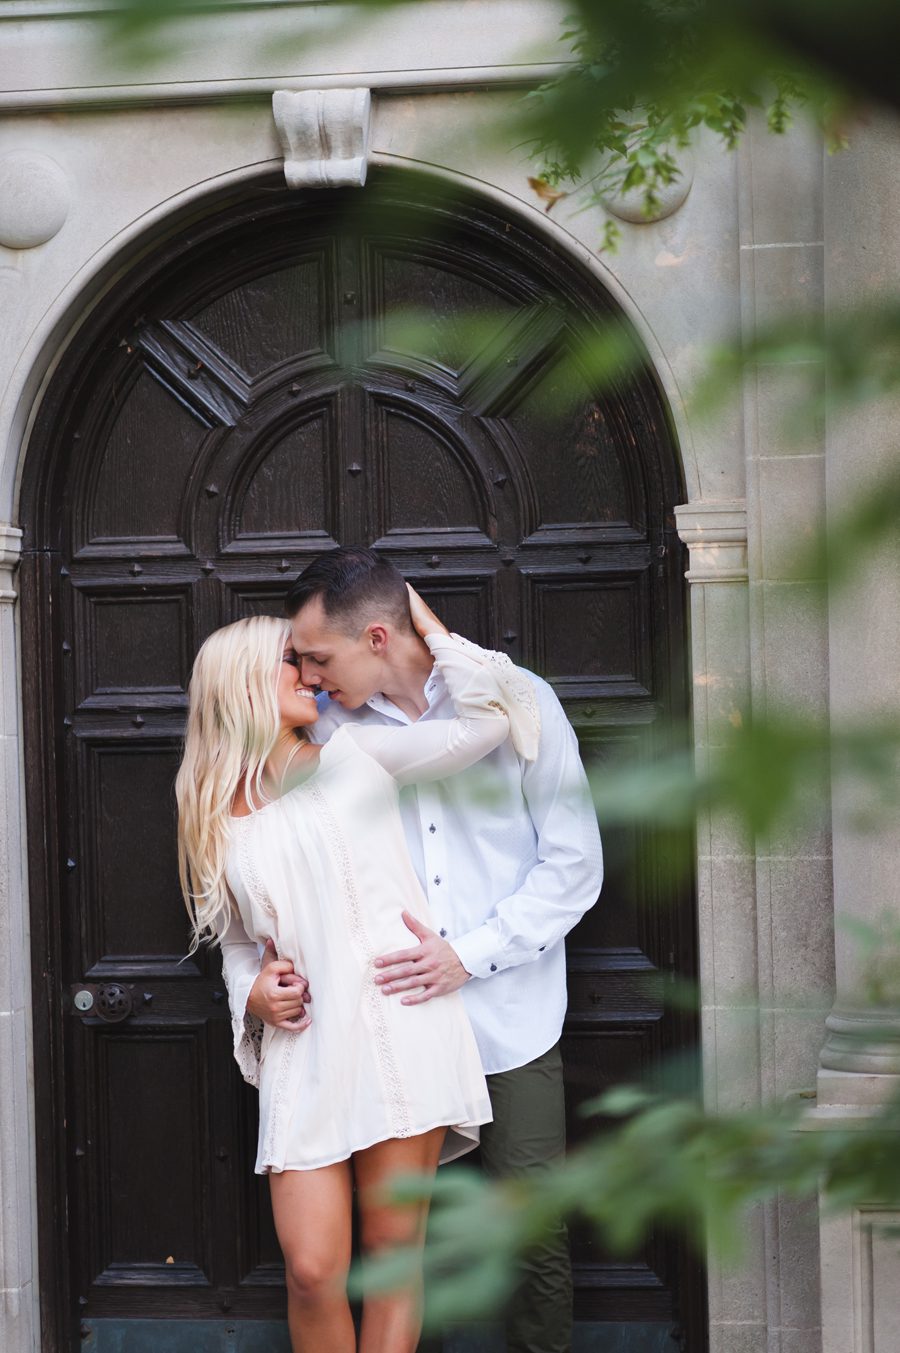 morton arboretum wedding photographer – intimate kiss